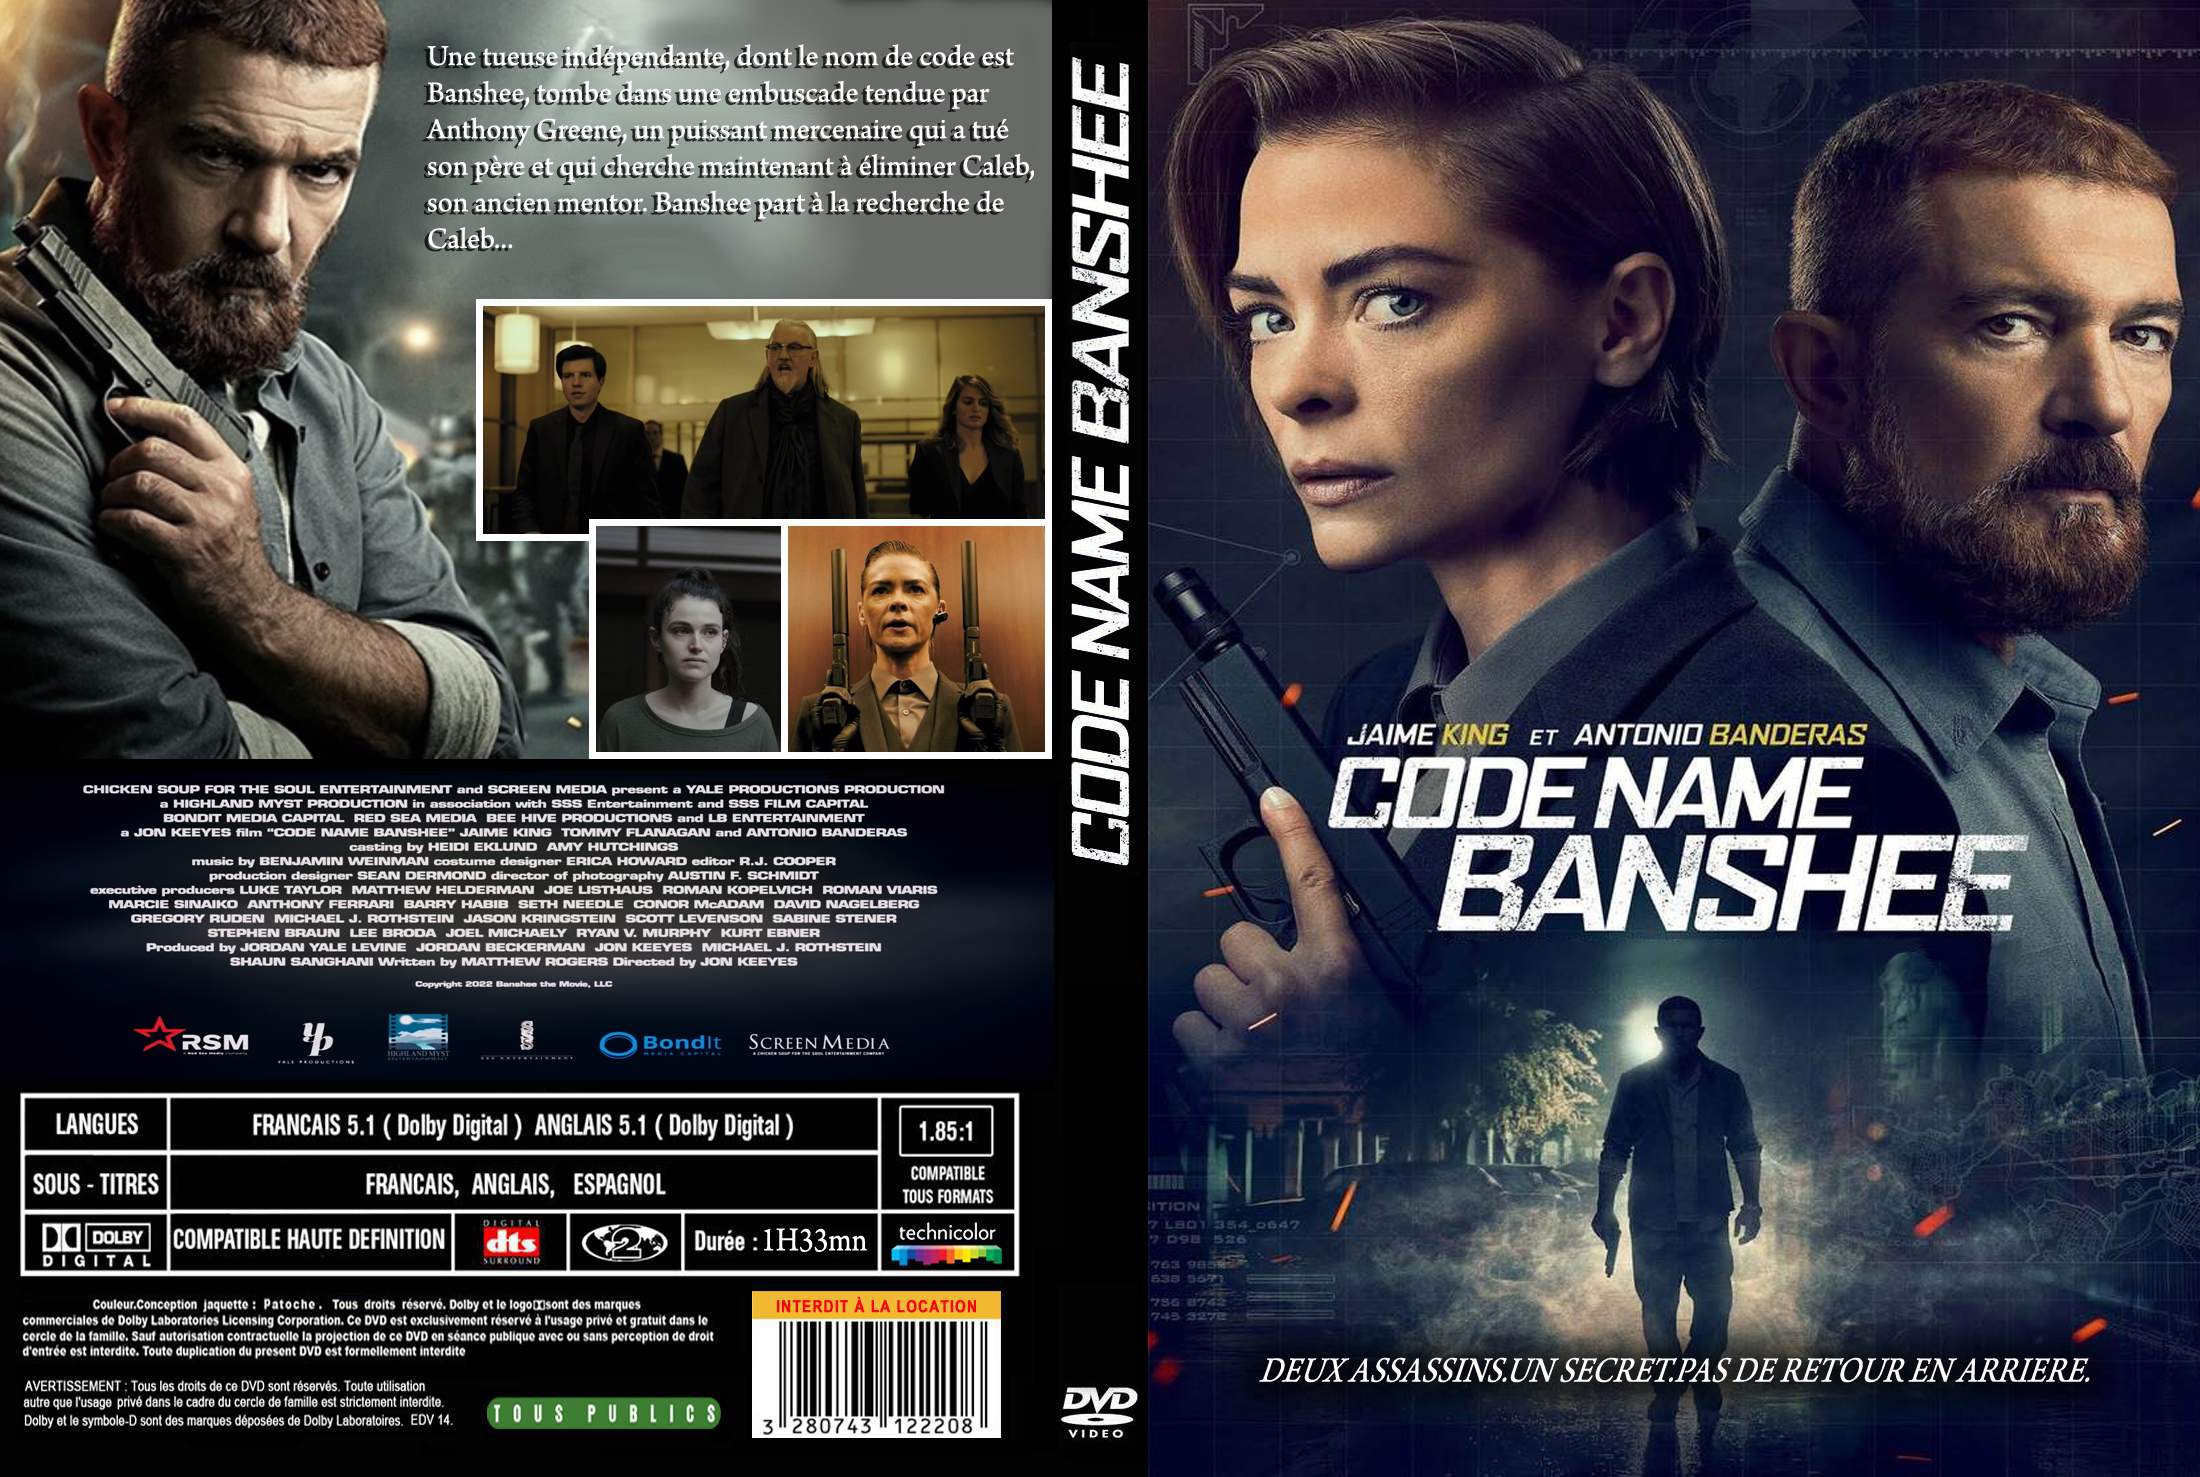 Jaquette DVD Code name banshee custom